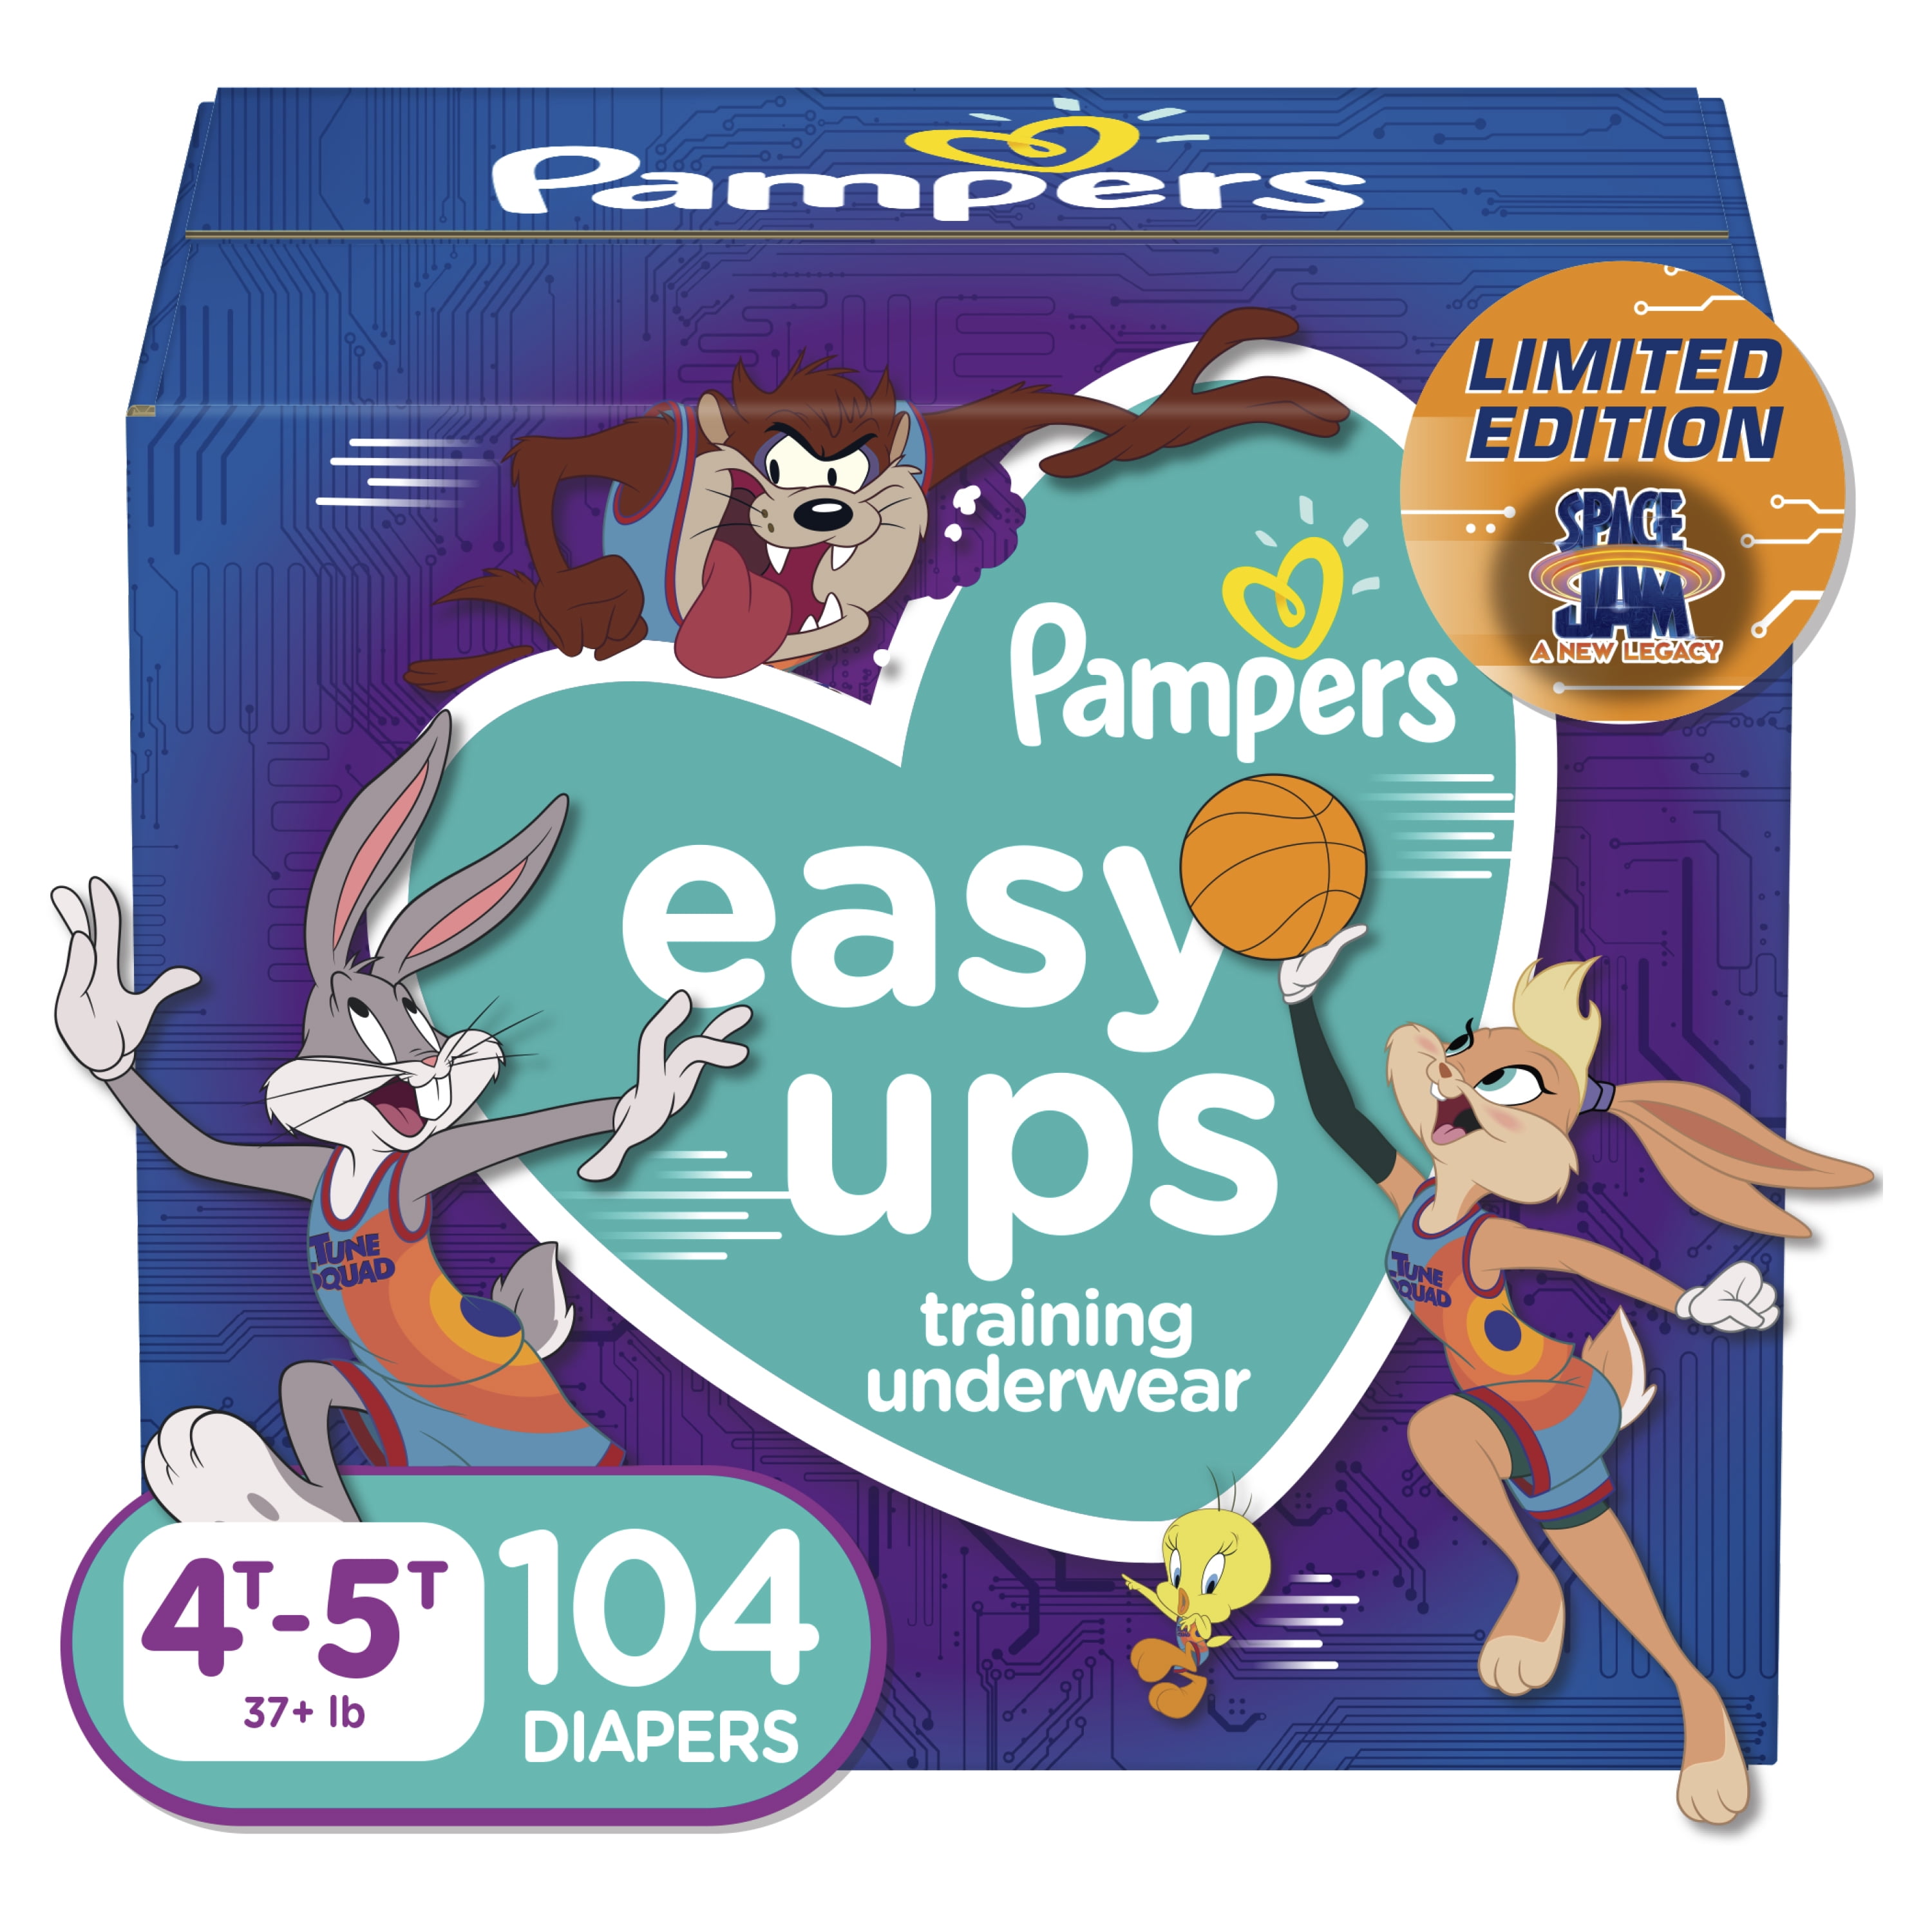 Pampers Easy Ups Training Underwear Space Jam Kuwait